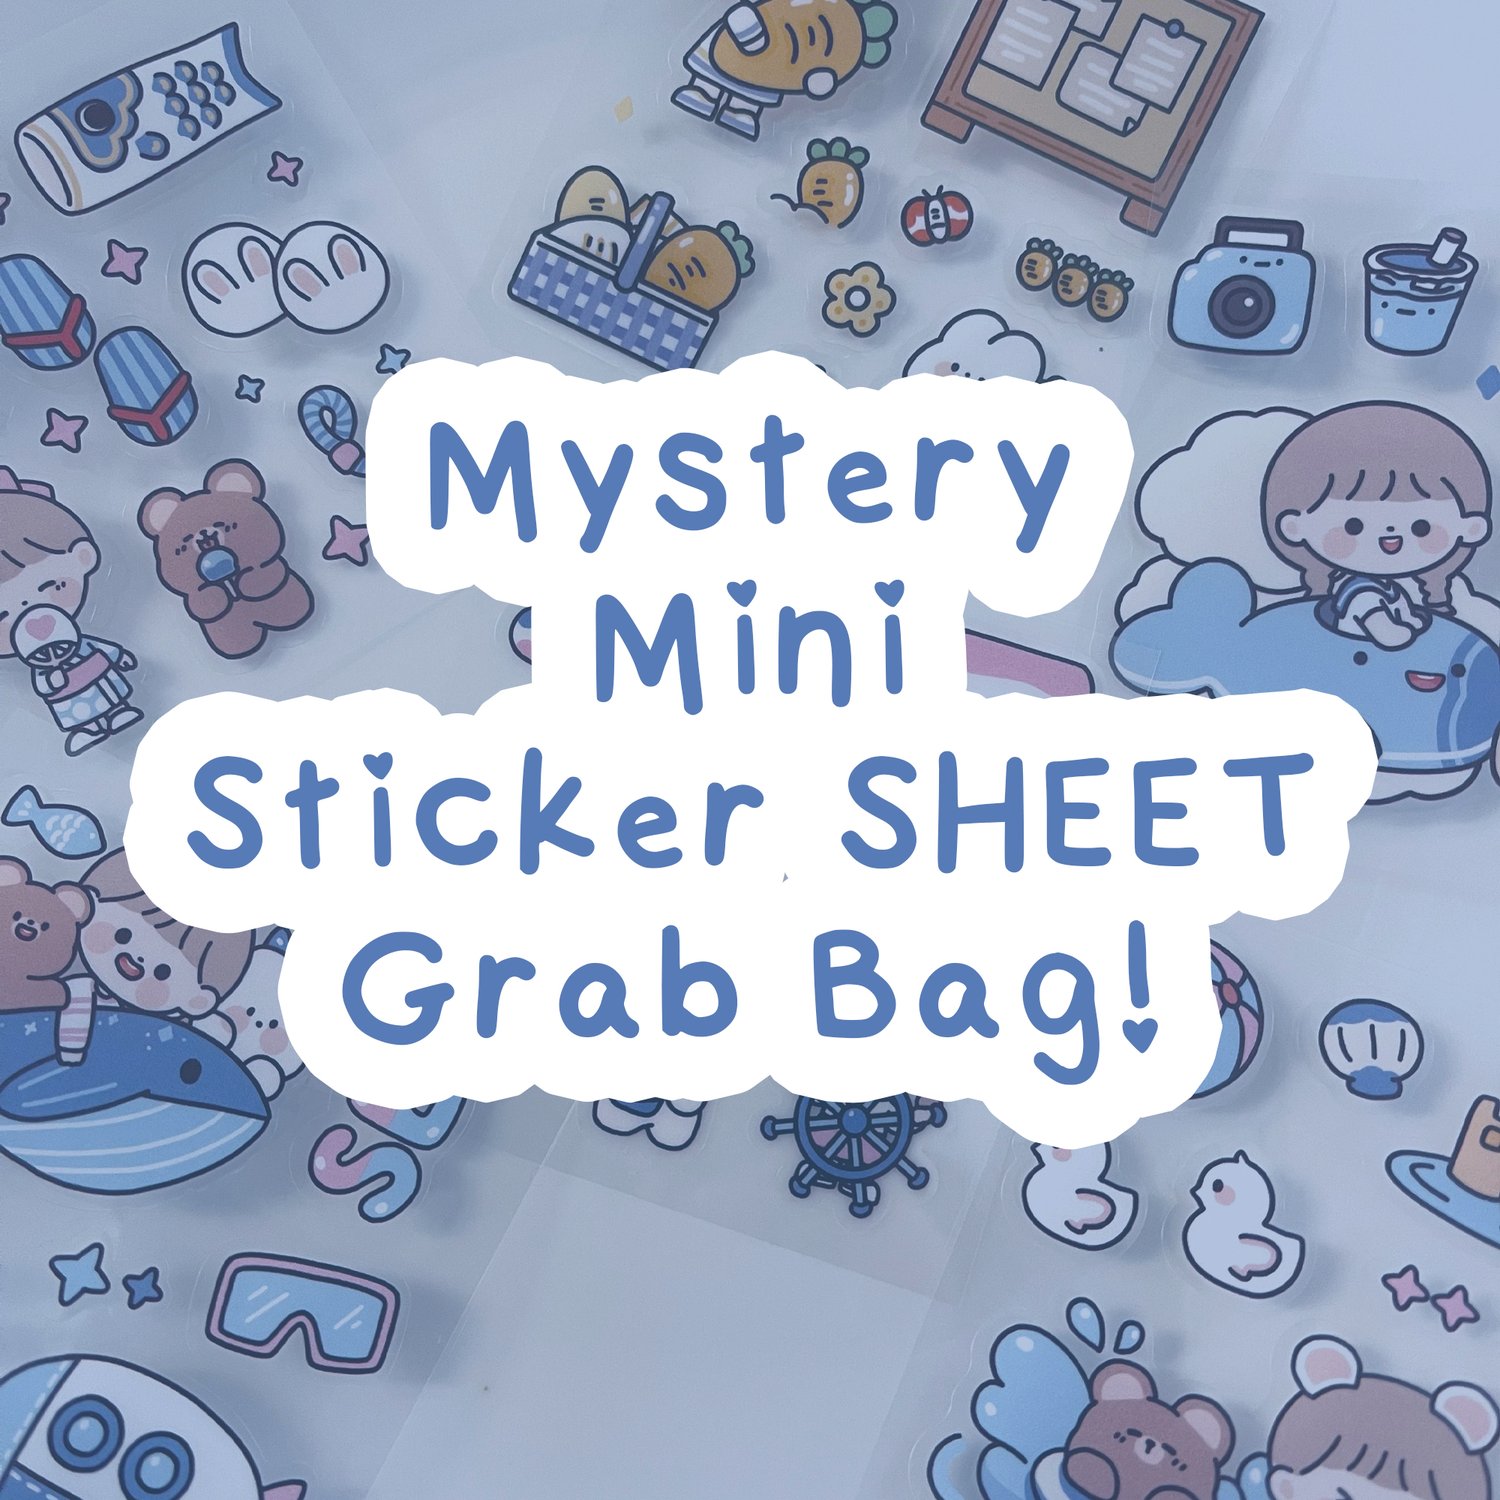 Random Kawaii Sticker Sheet Grab Bag, Mystery Sticker Sheets, Sticker Packs, Journal Stickers, Clear